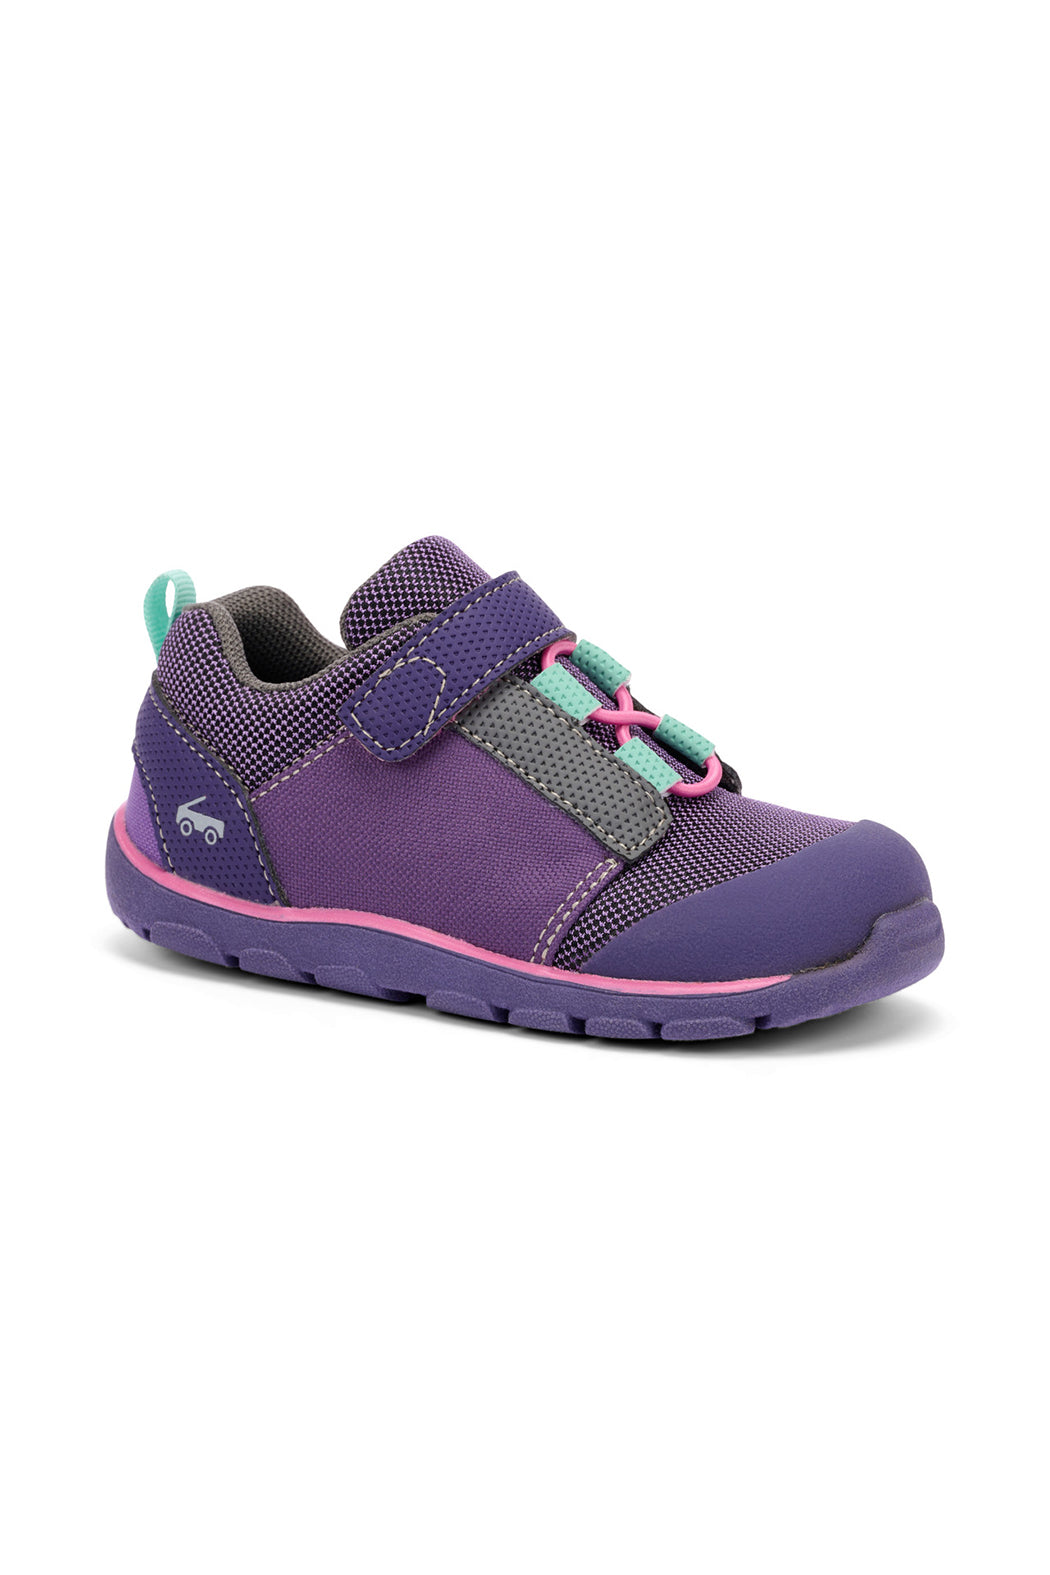 See Kai Run Summit Hiking Sneaker - Purple